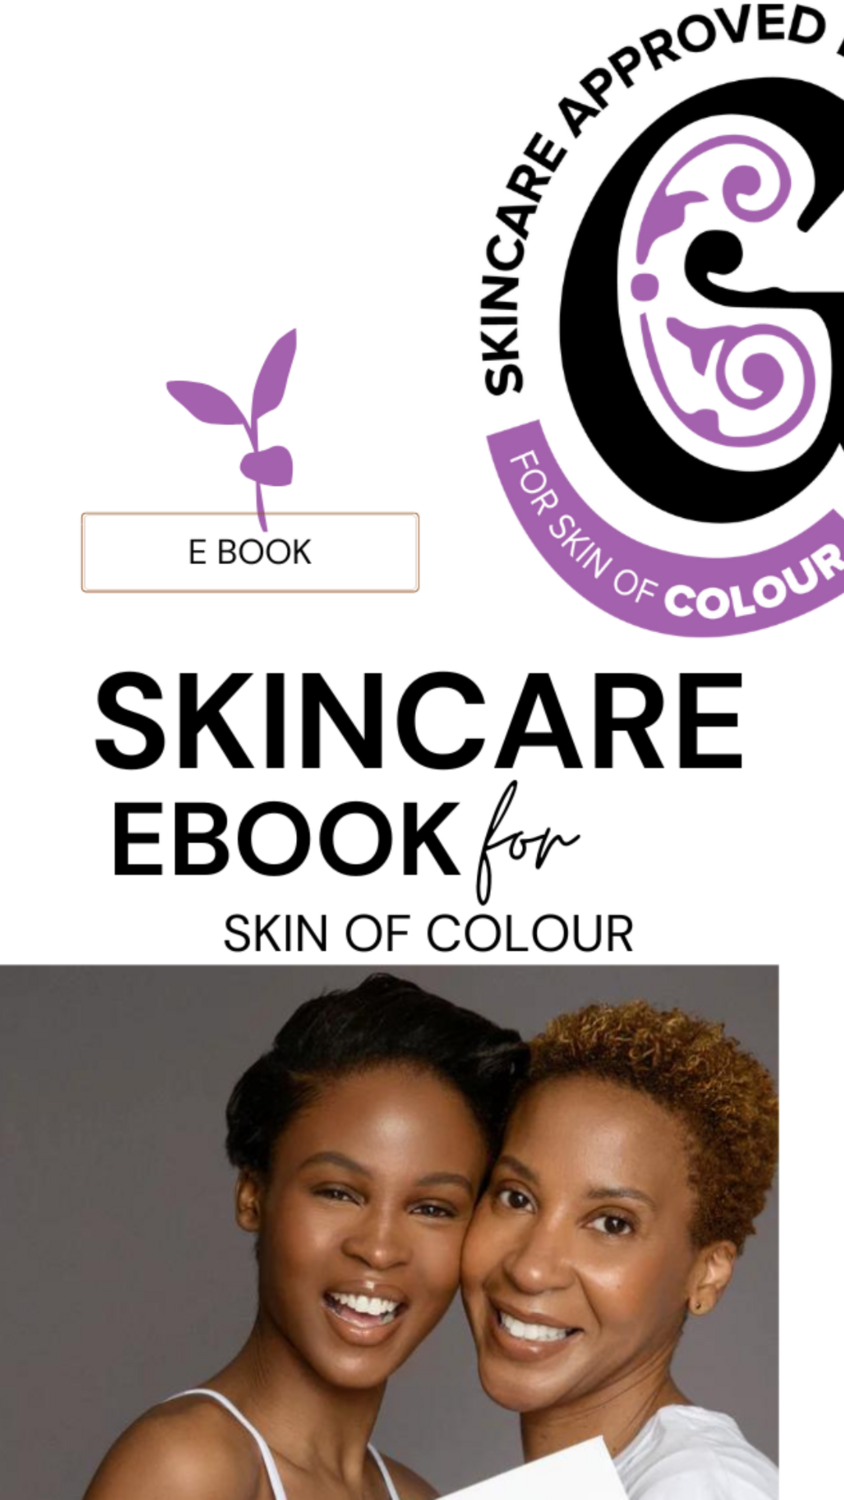 Free Skincare Ebook for Skin of Colour